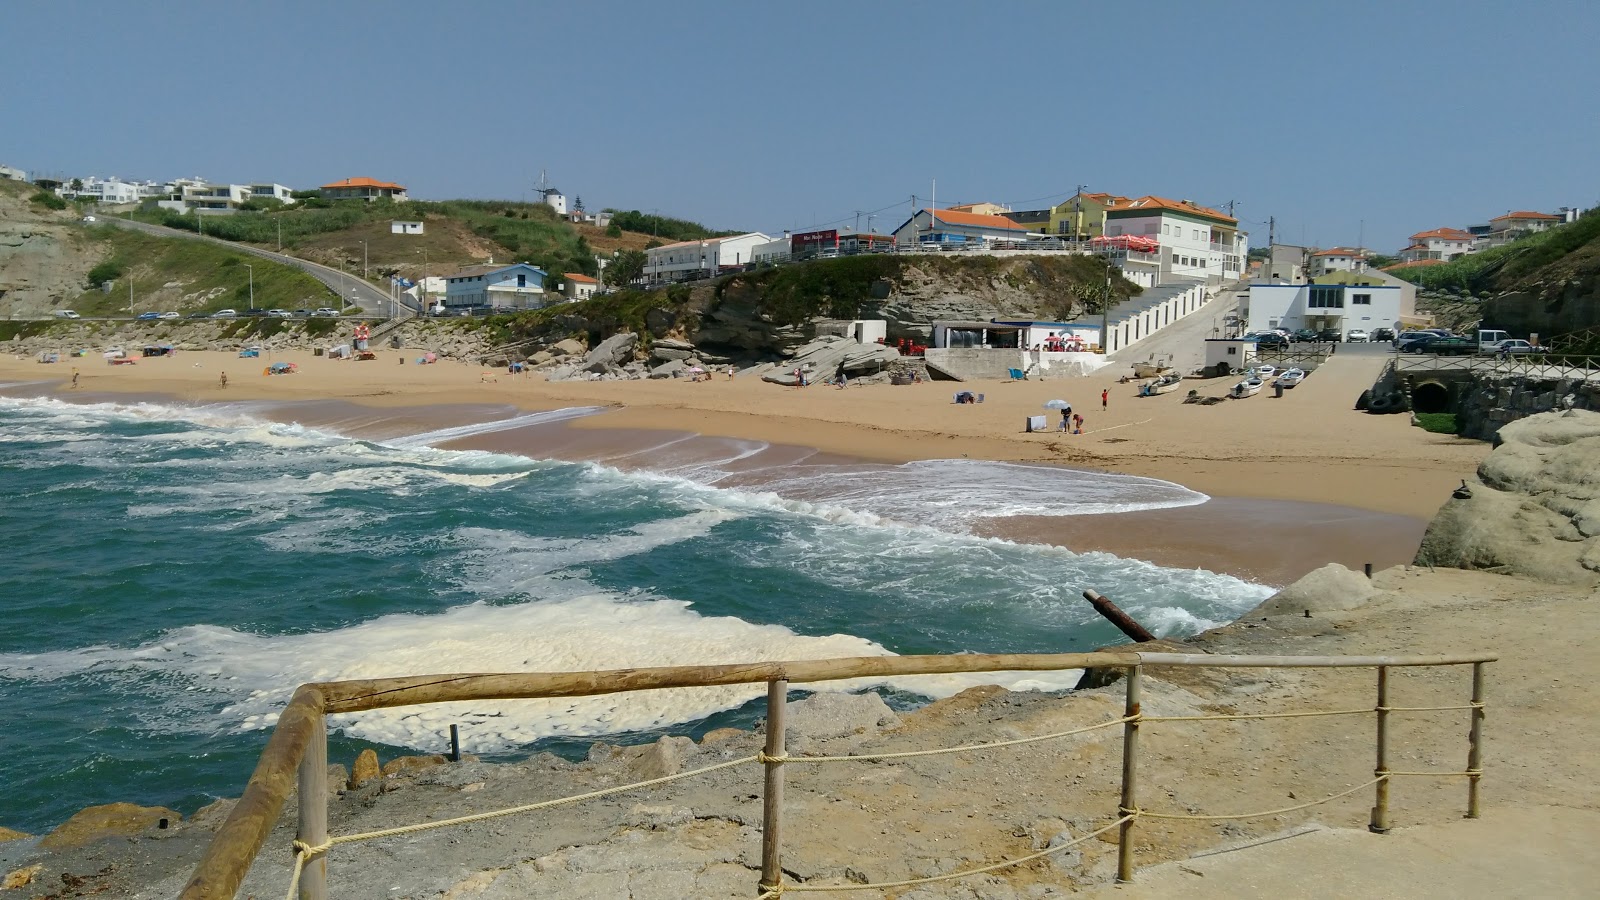 Fotografie cu Praia de Porto Dinheiro sprijinit de stânci